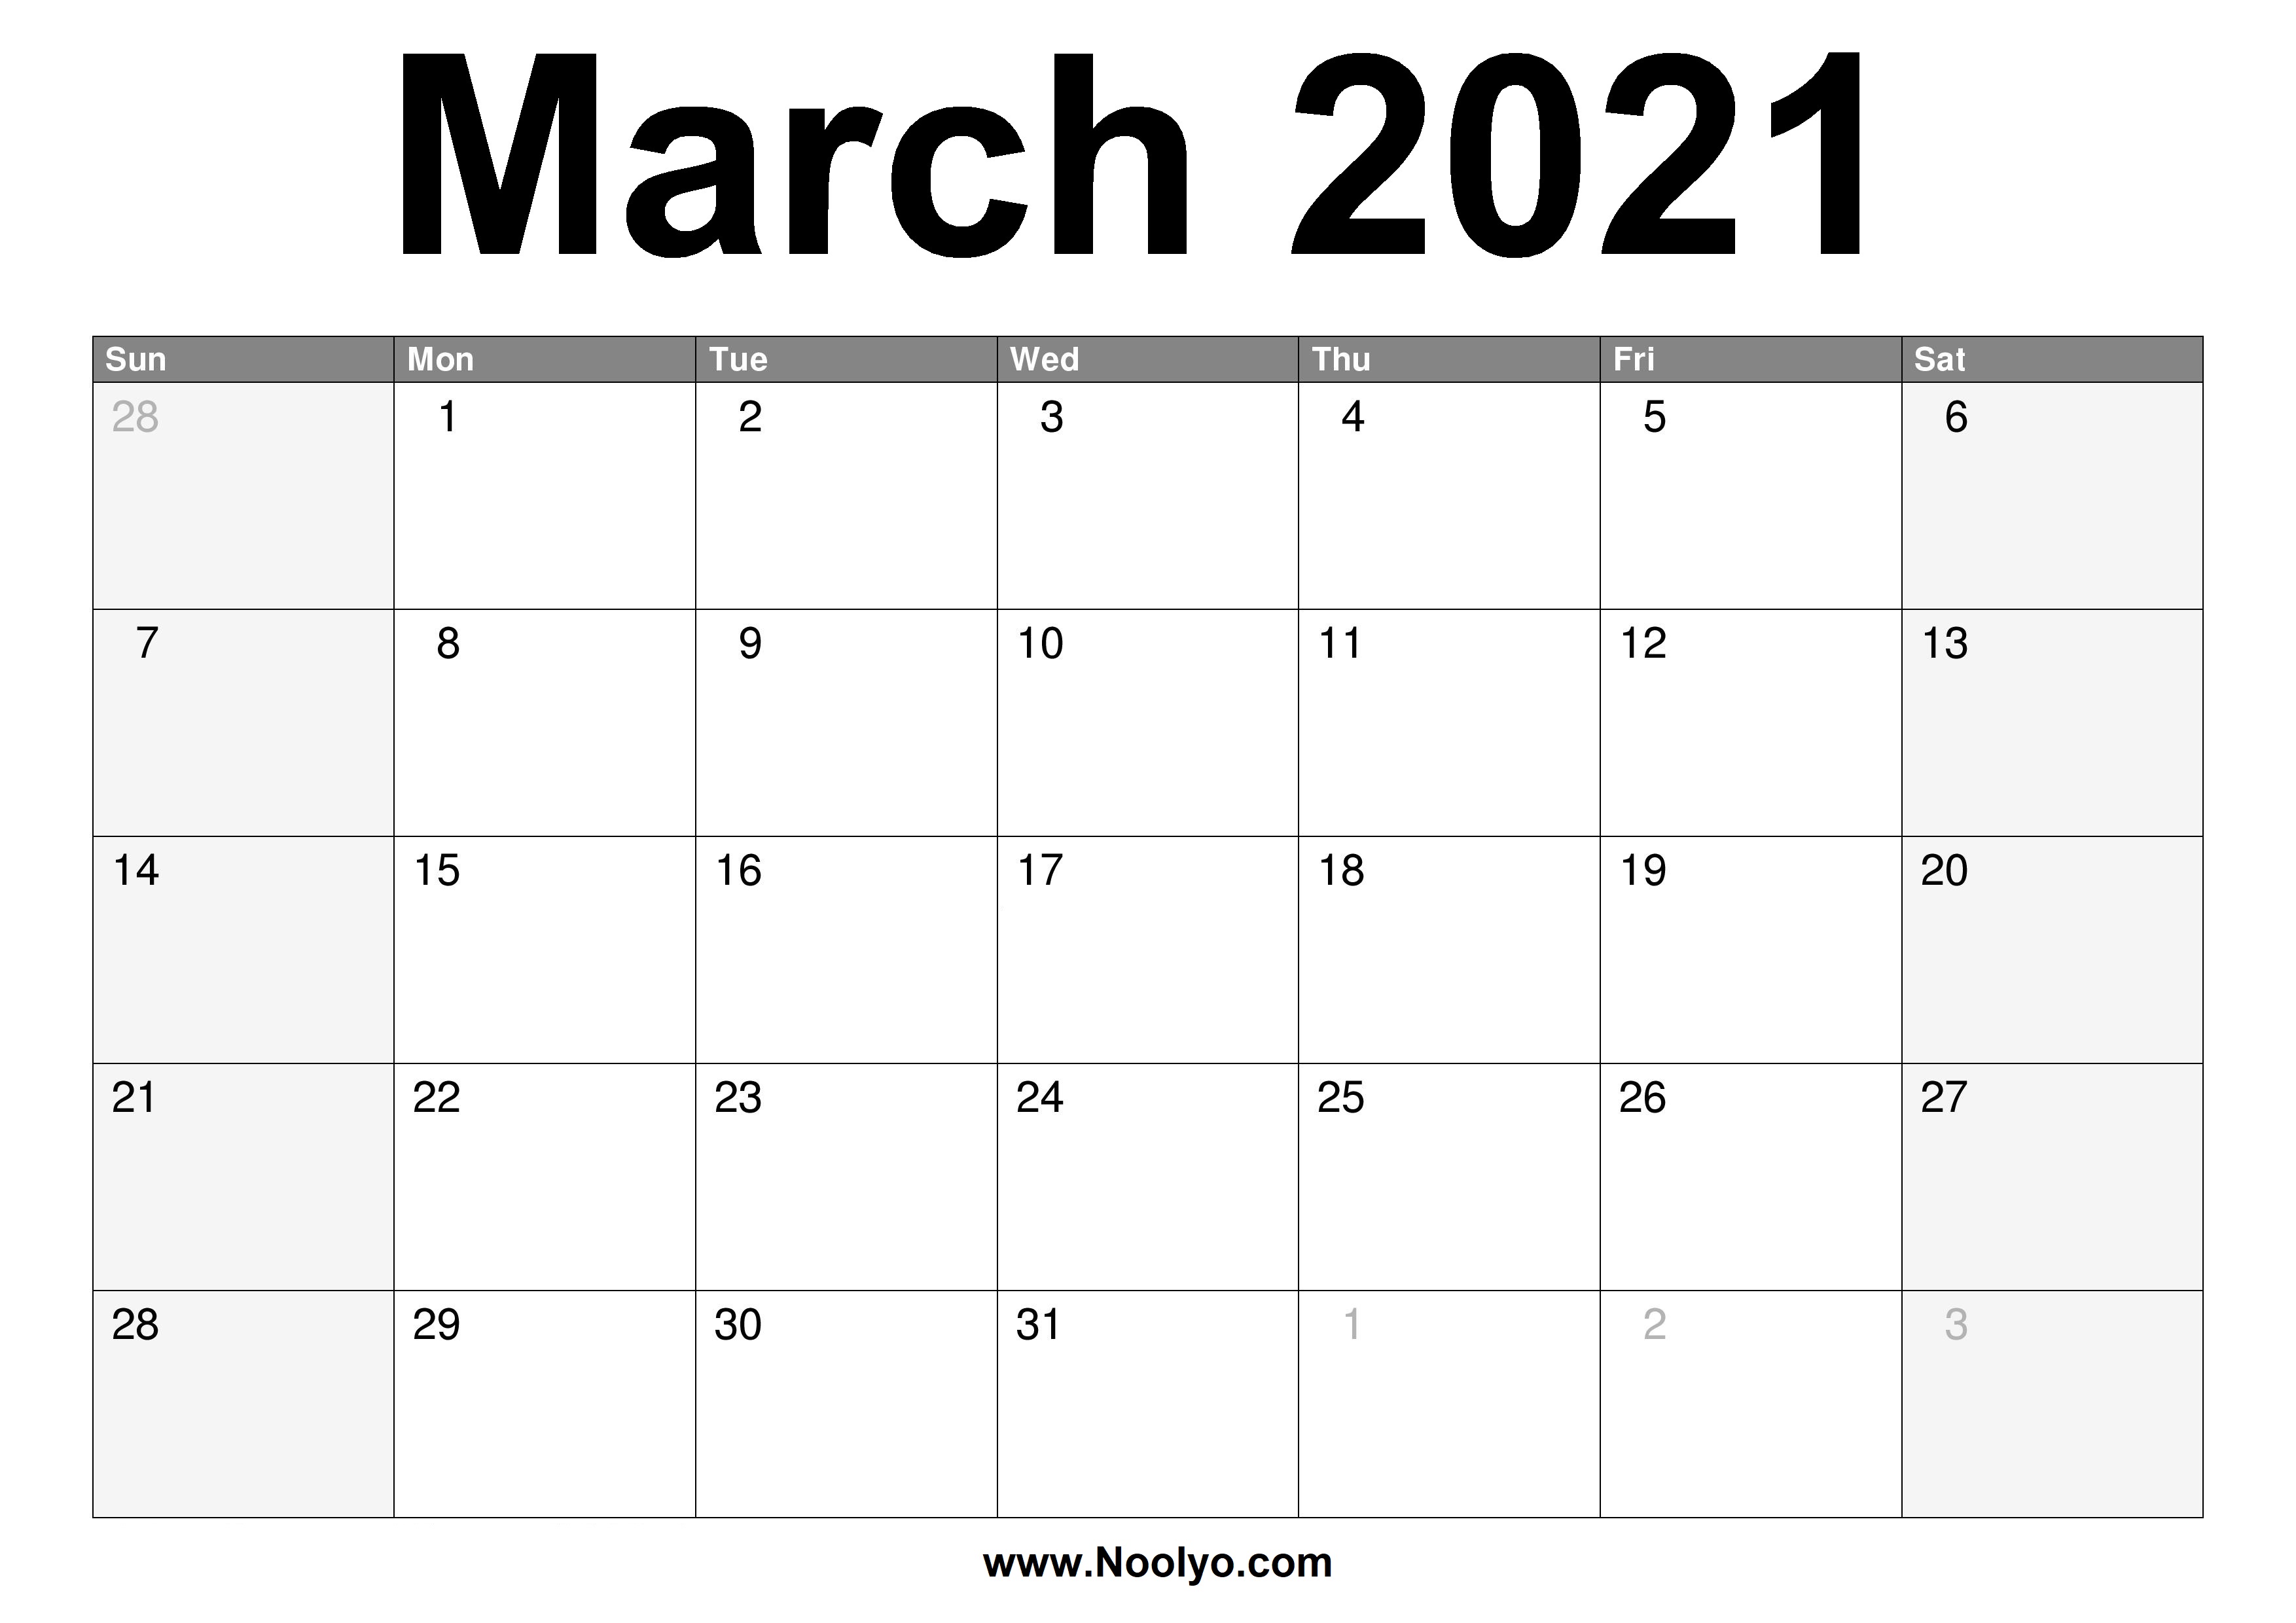 march 2021 calendar printable free March 2021 Calendar Printable Free Download Noolyo Com march 2021 calendar printable free